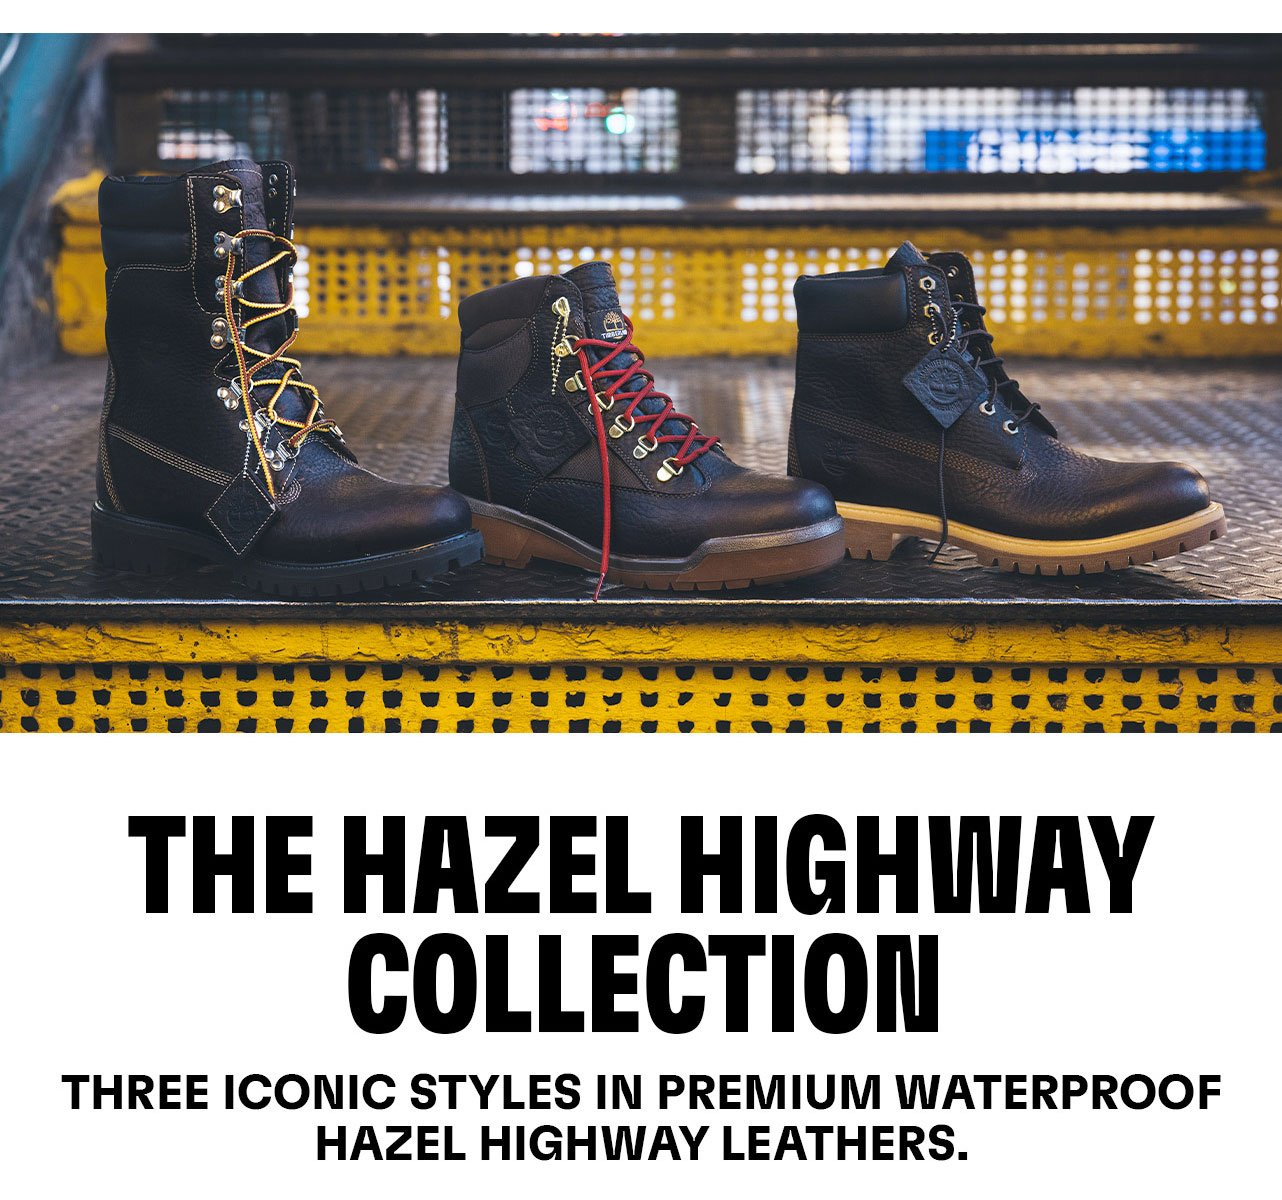 The Hazel Highway Collection Three Iconic Styles In Premium Waterproof Hazel Highway Leathers.